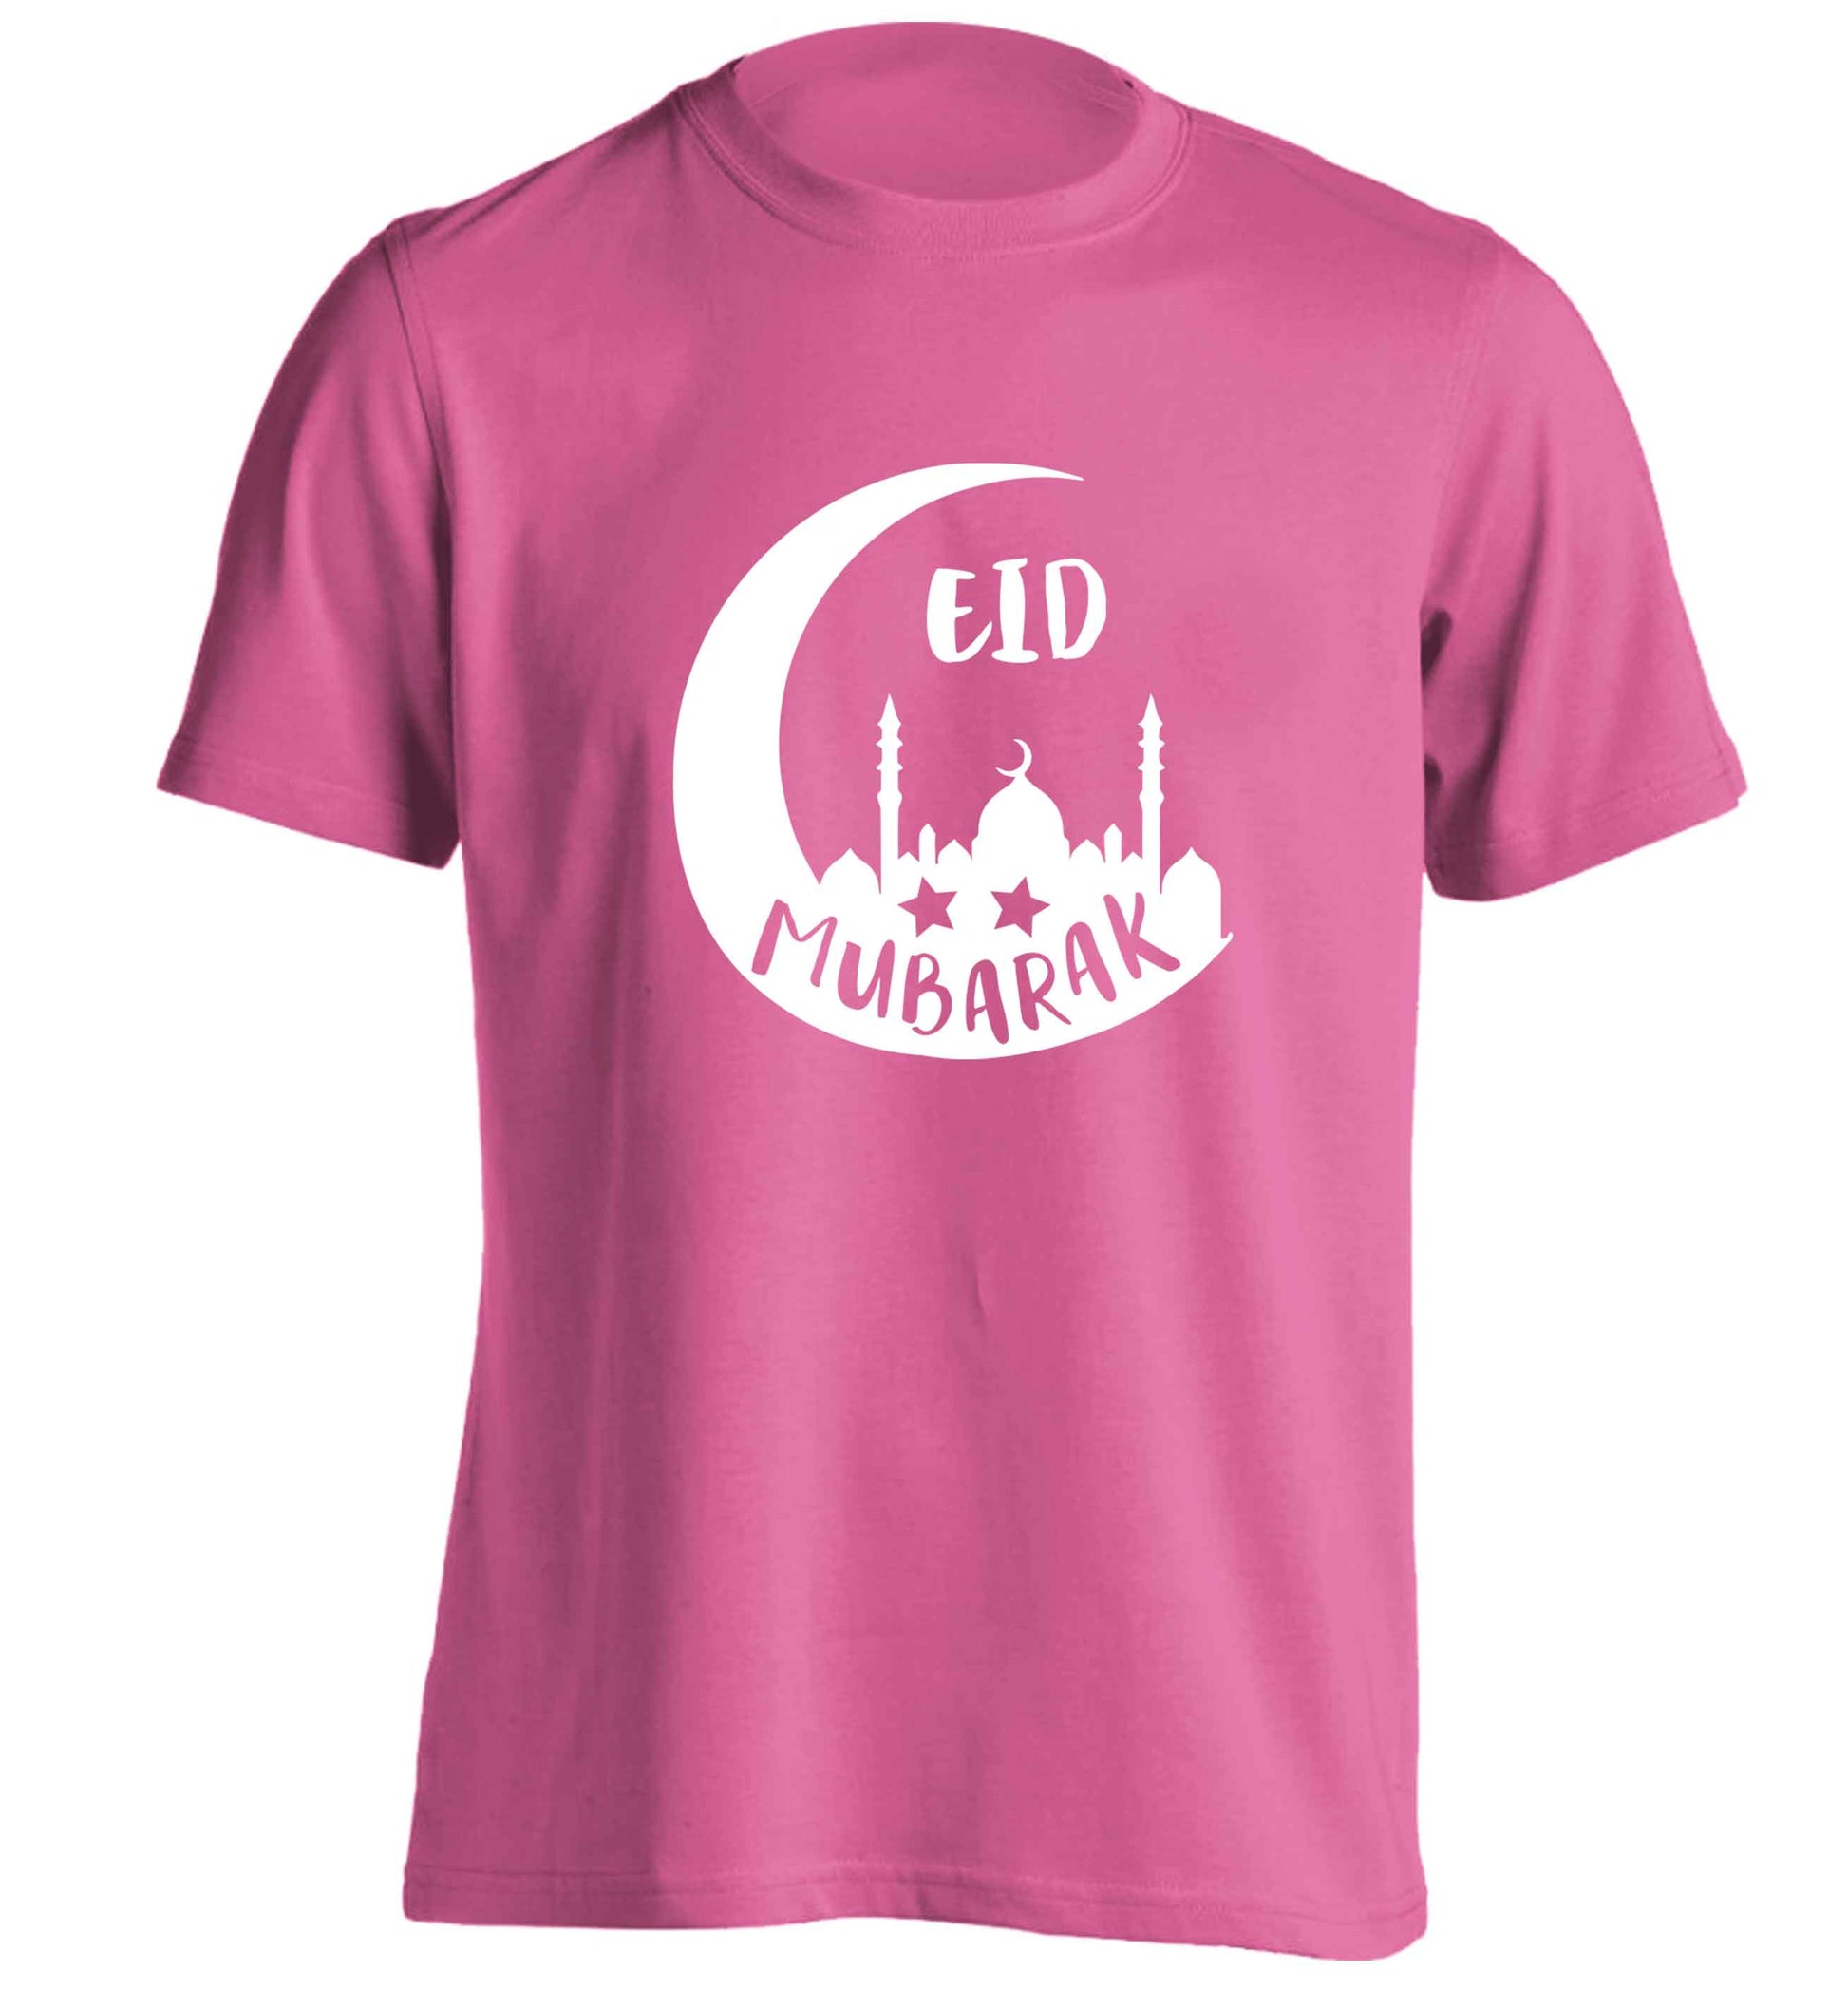 Eid mubarak adults unisex pink Tshirt 2XL